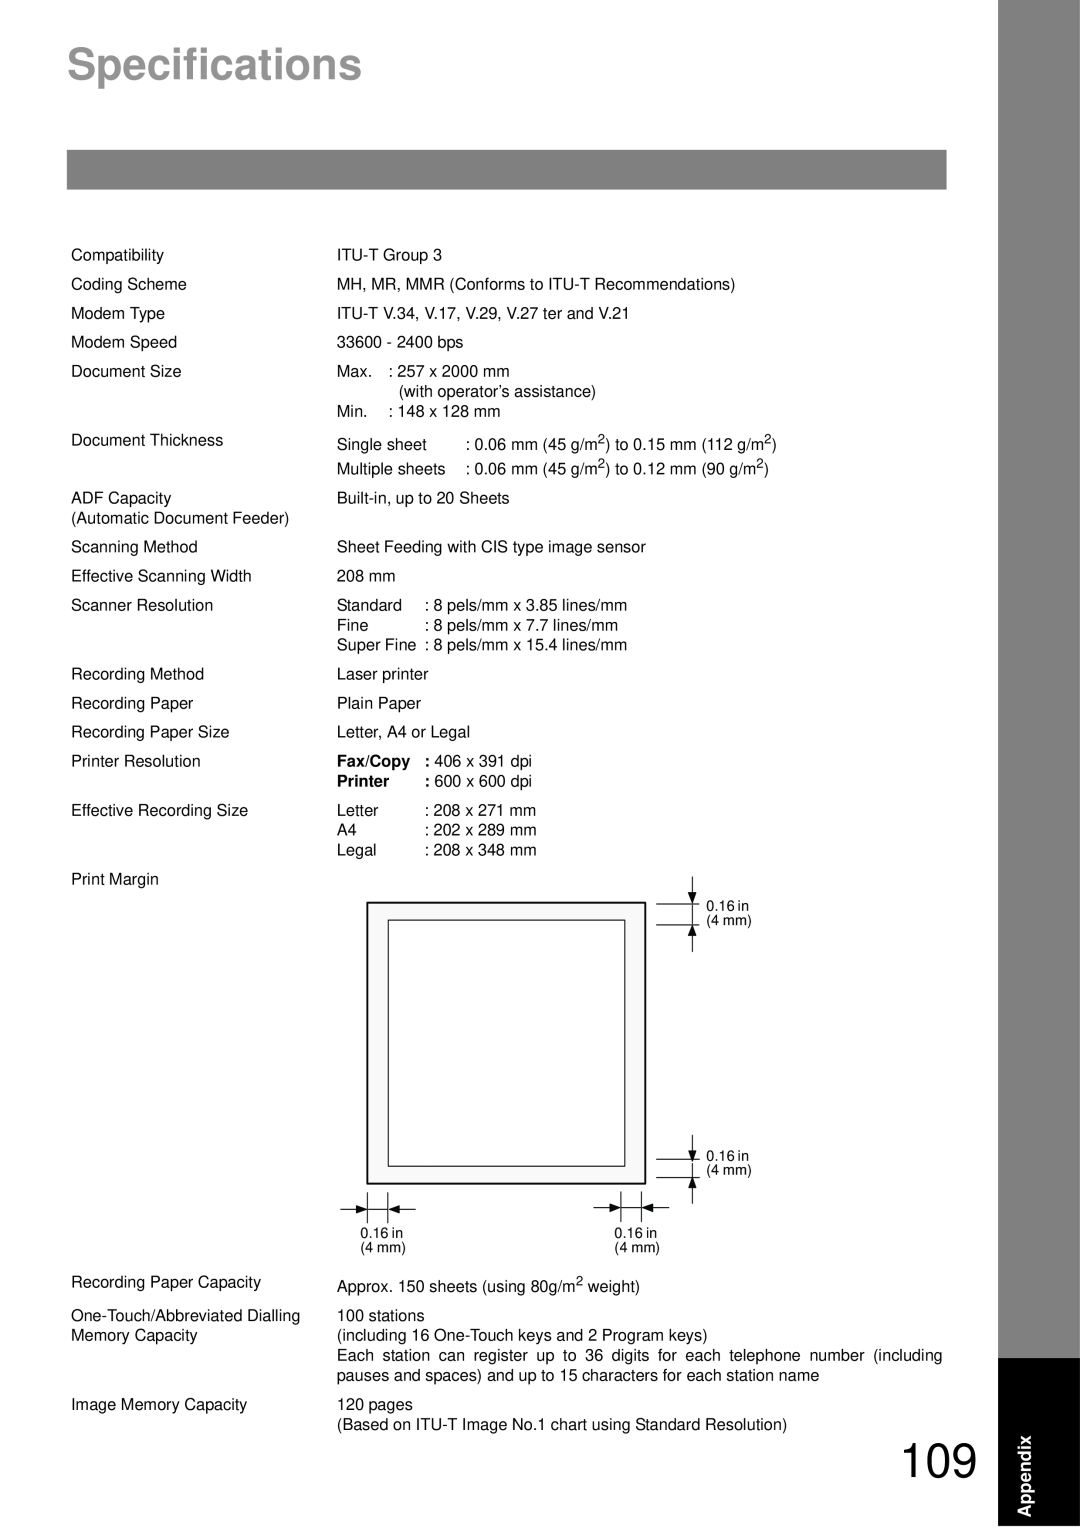 Castelle UF-490 appendix Specifications, Fax/Copy, Printer 